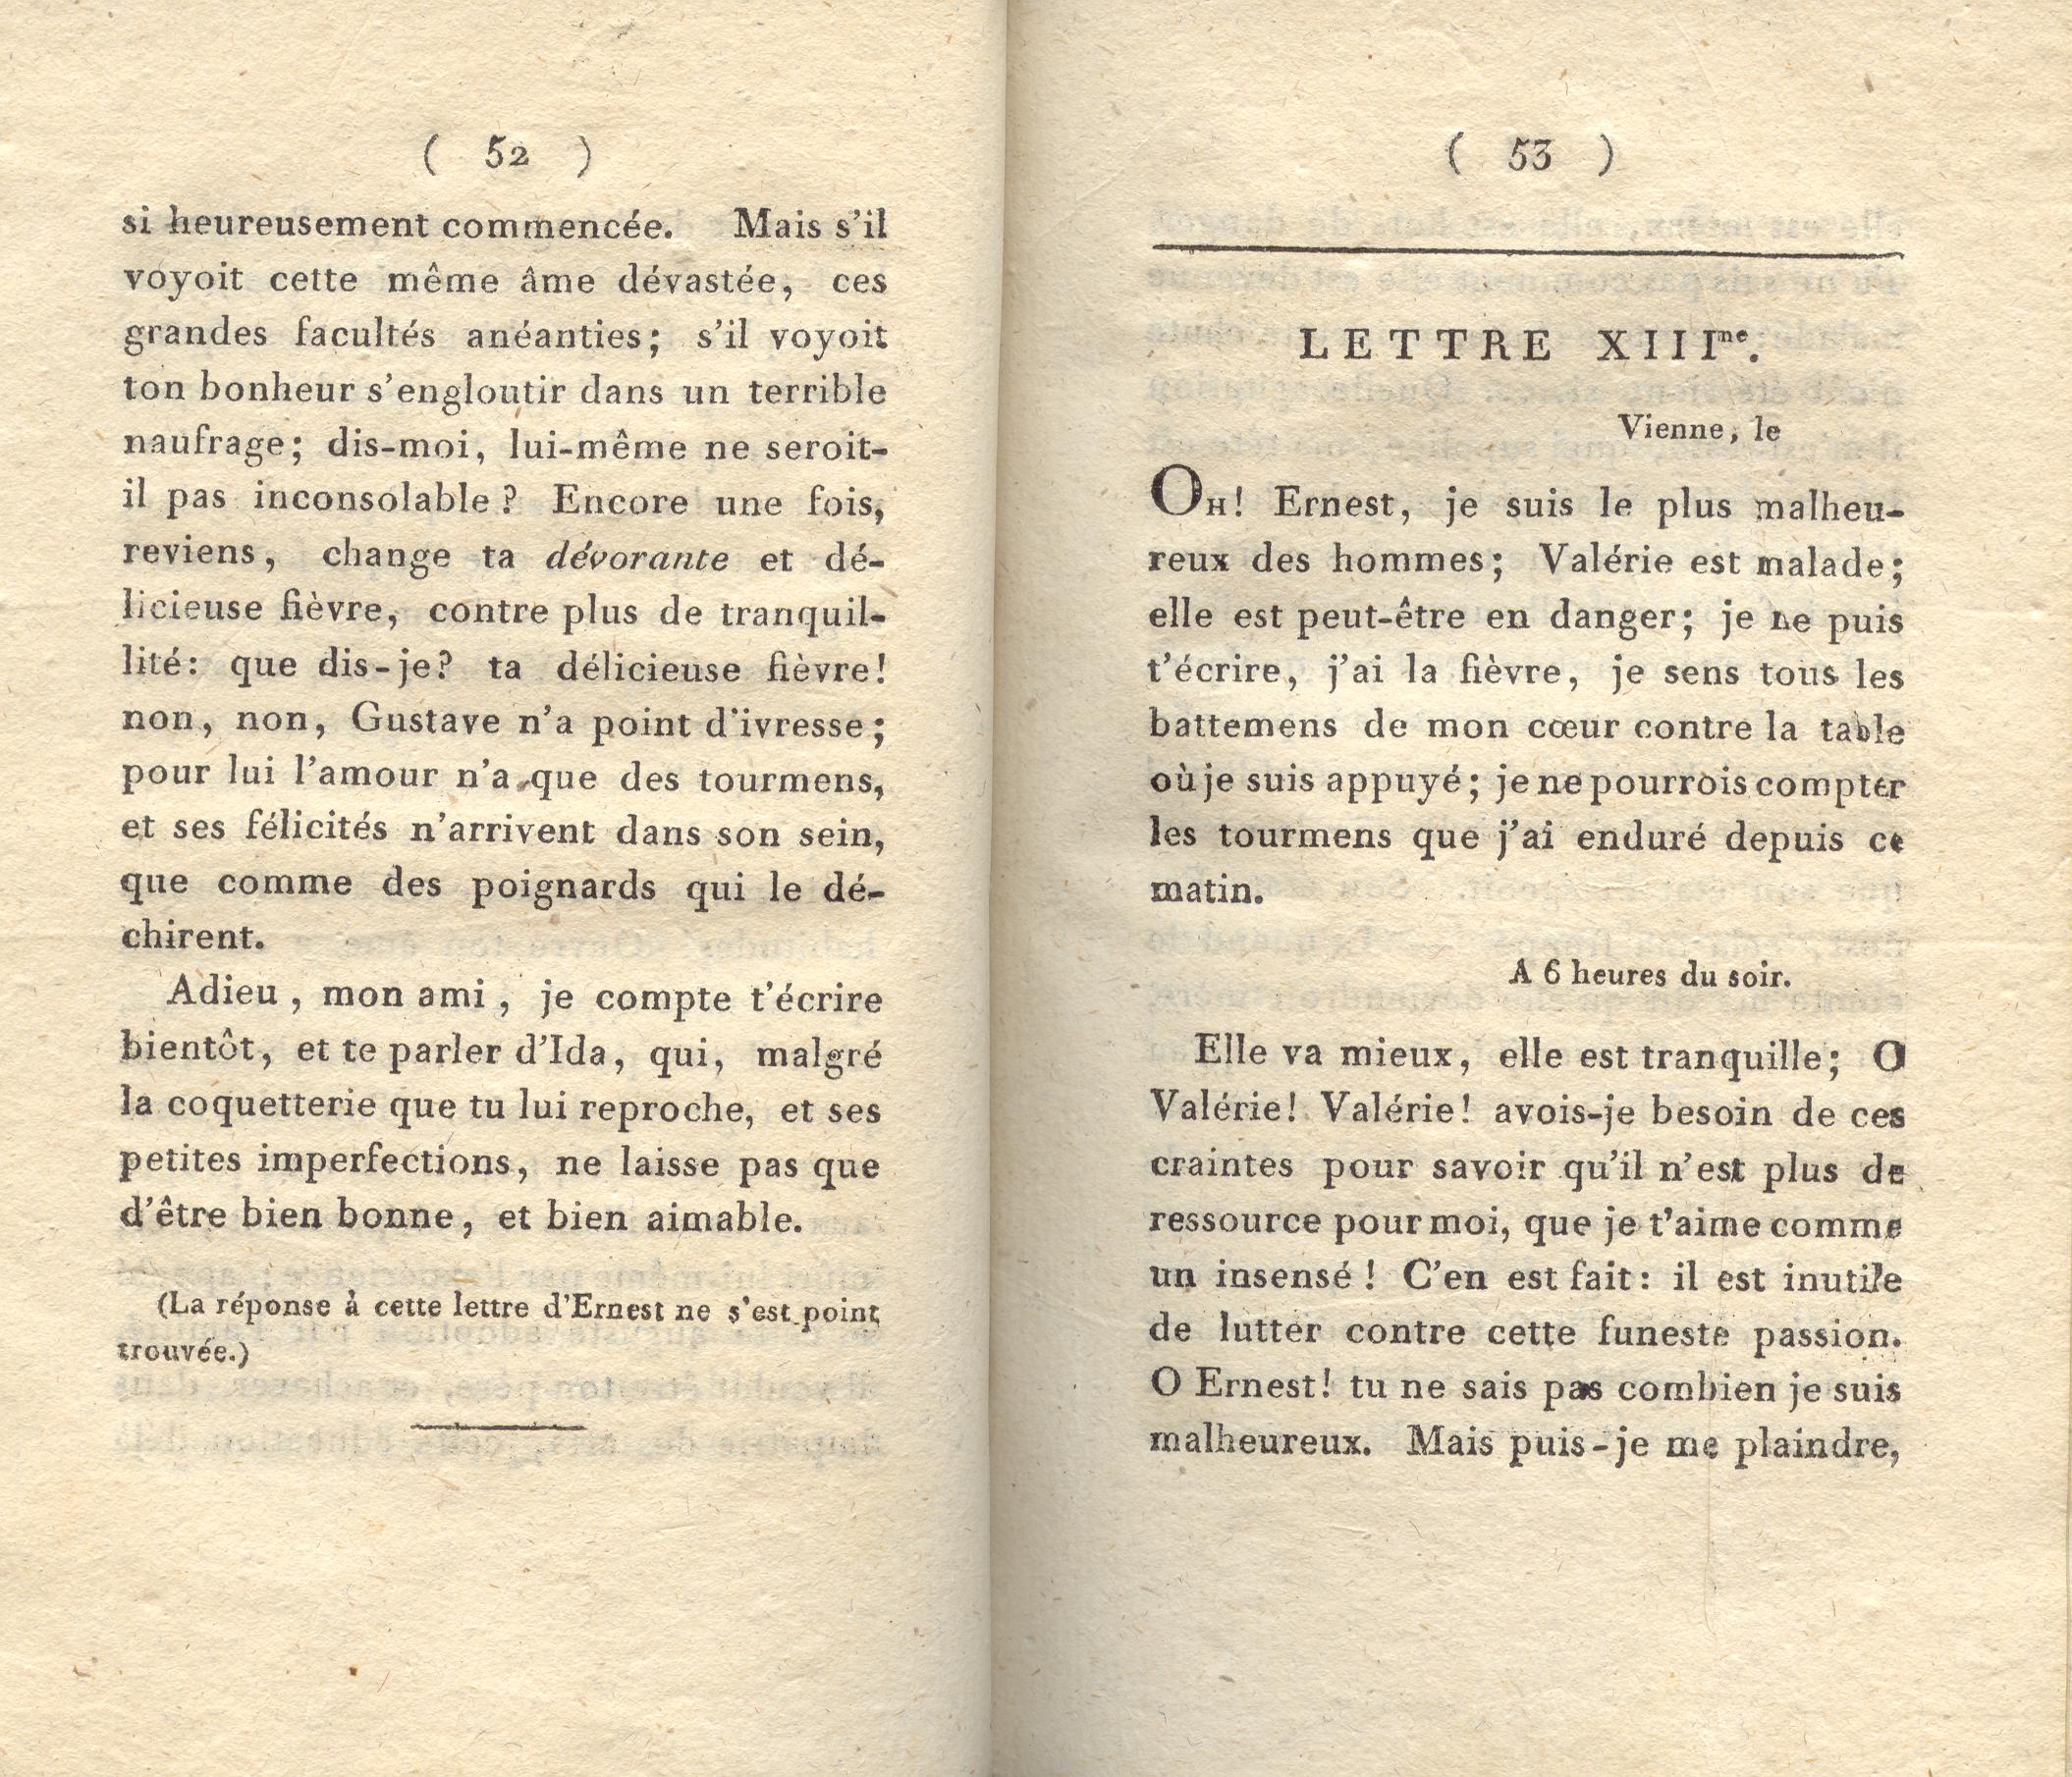 Valérie [1] (1804) | 33. (52-53) Main body of text